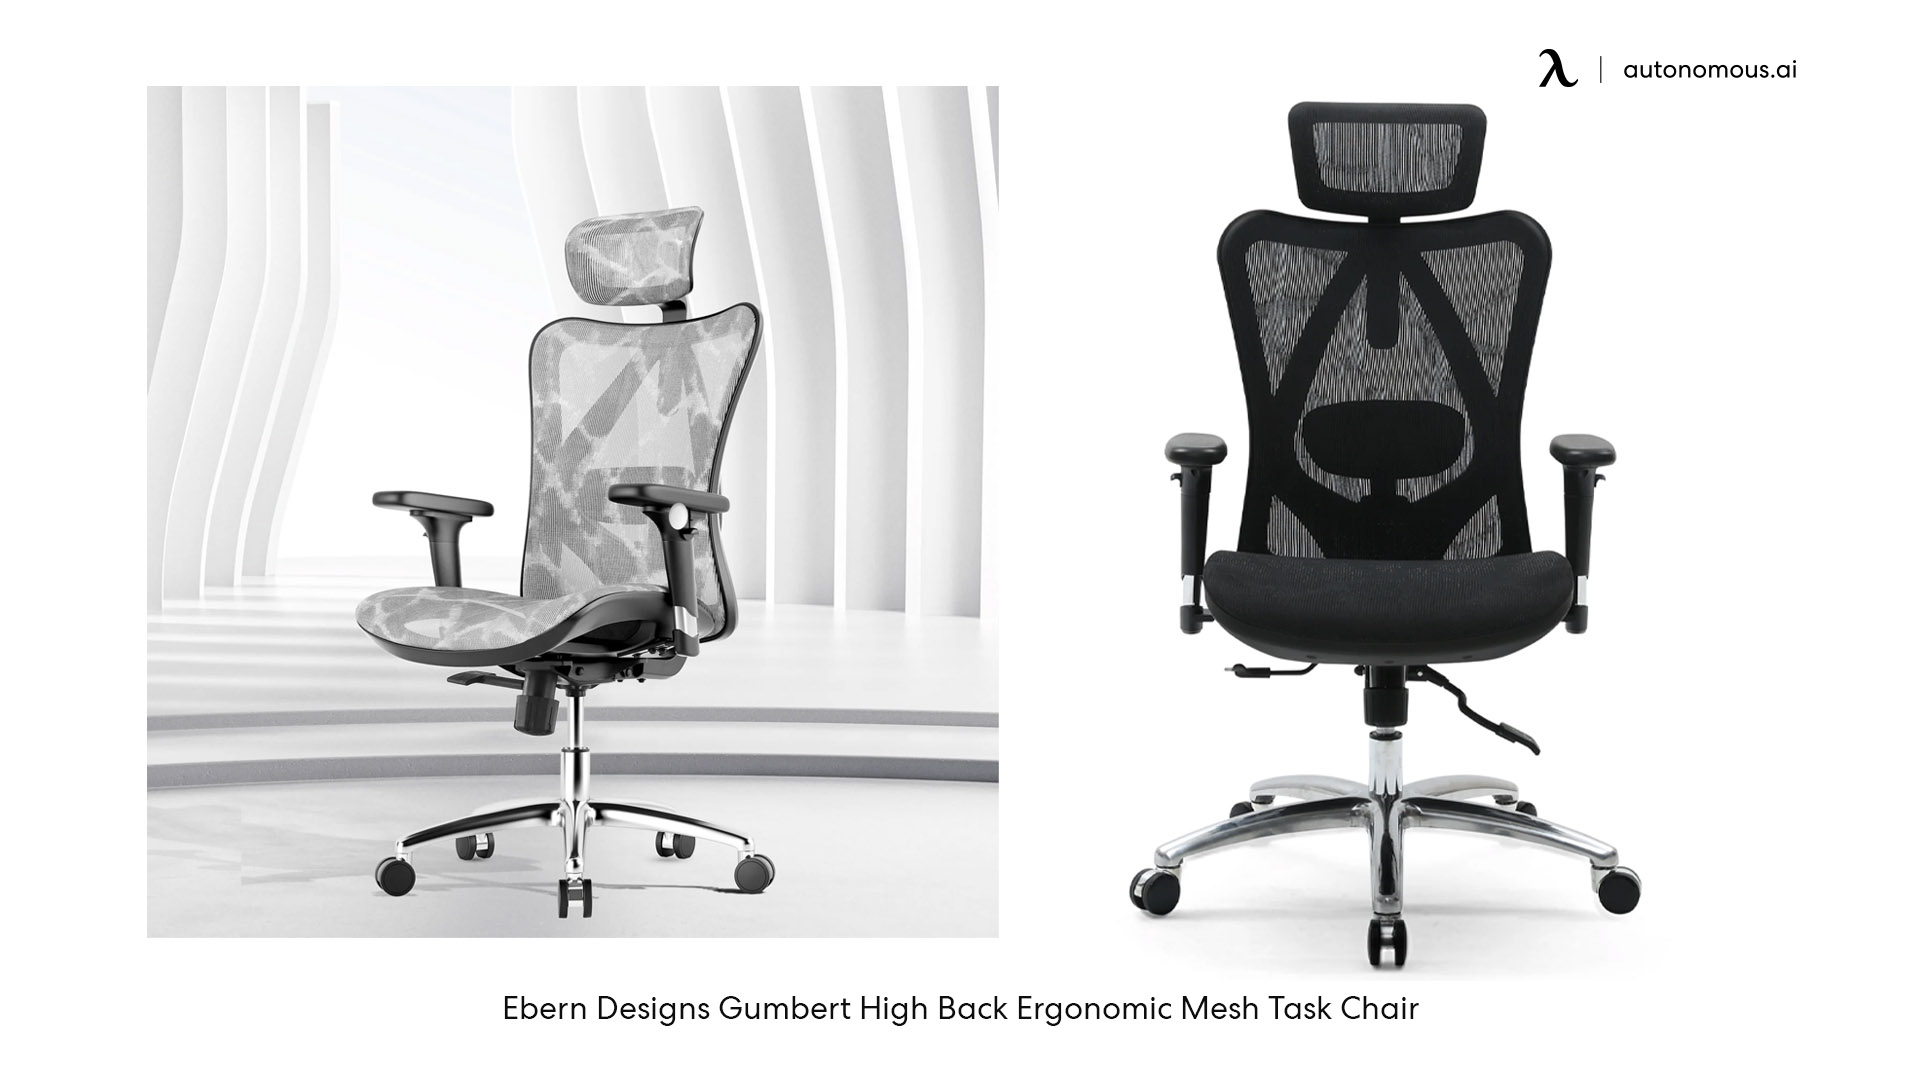 Ebern Designs Gumbert High Back Ergonomic Mesh Task Chair